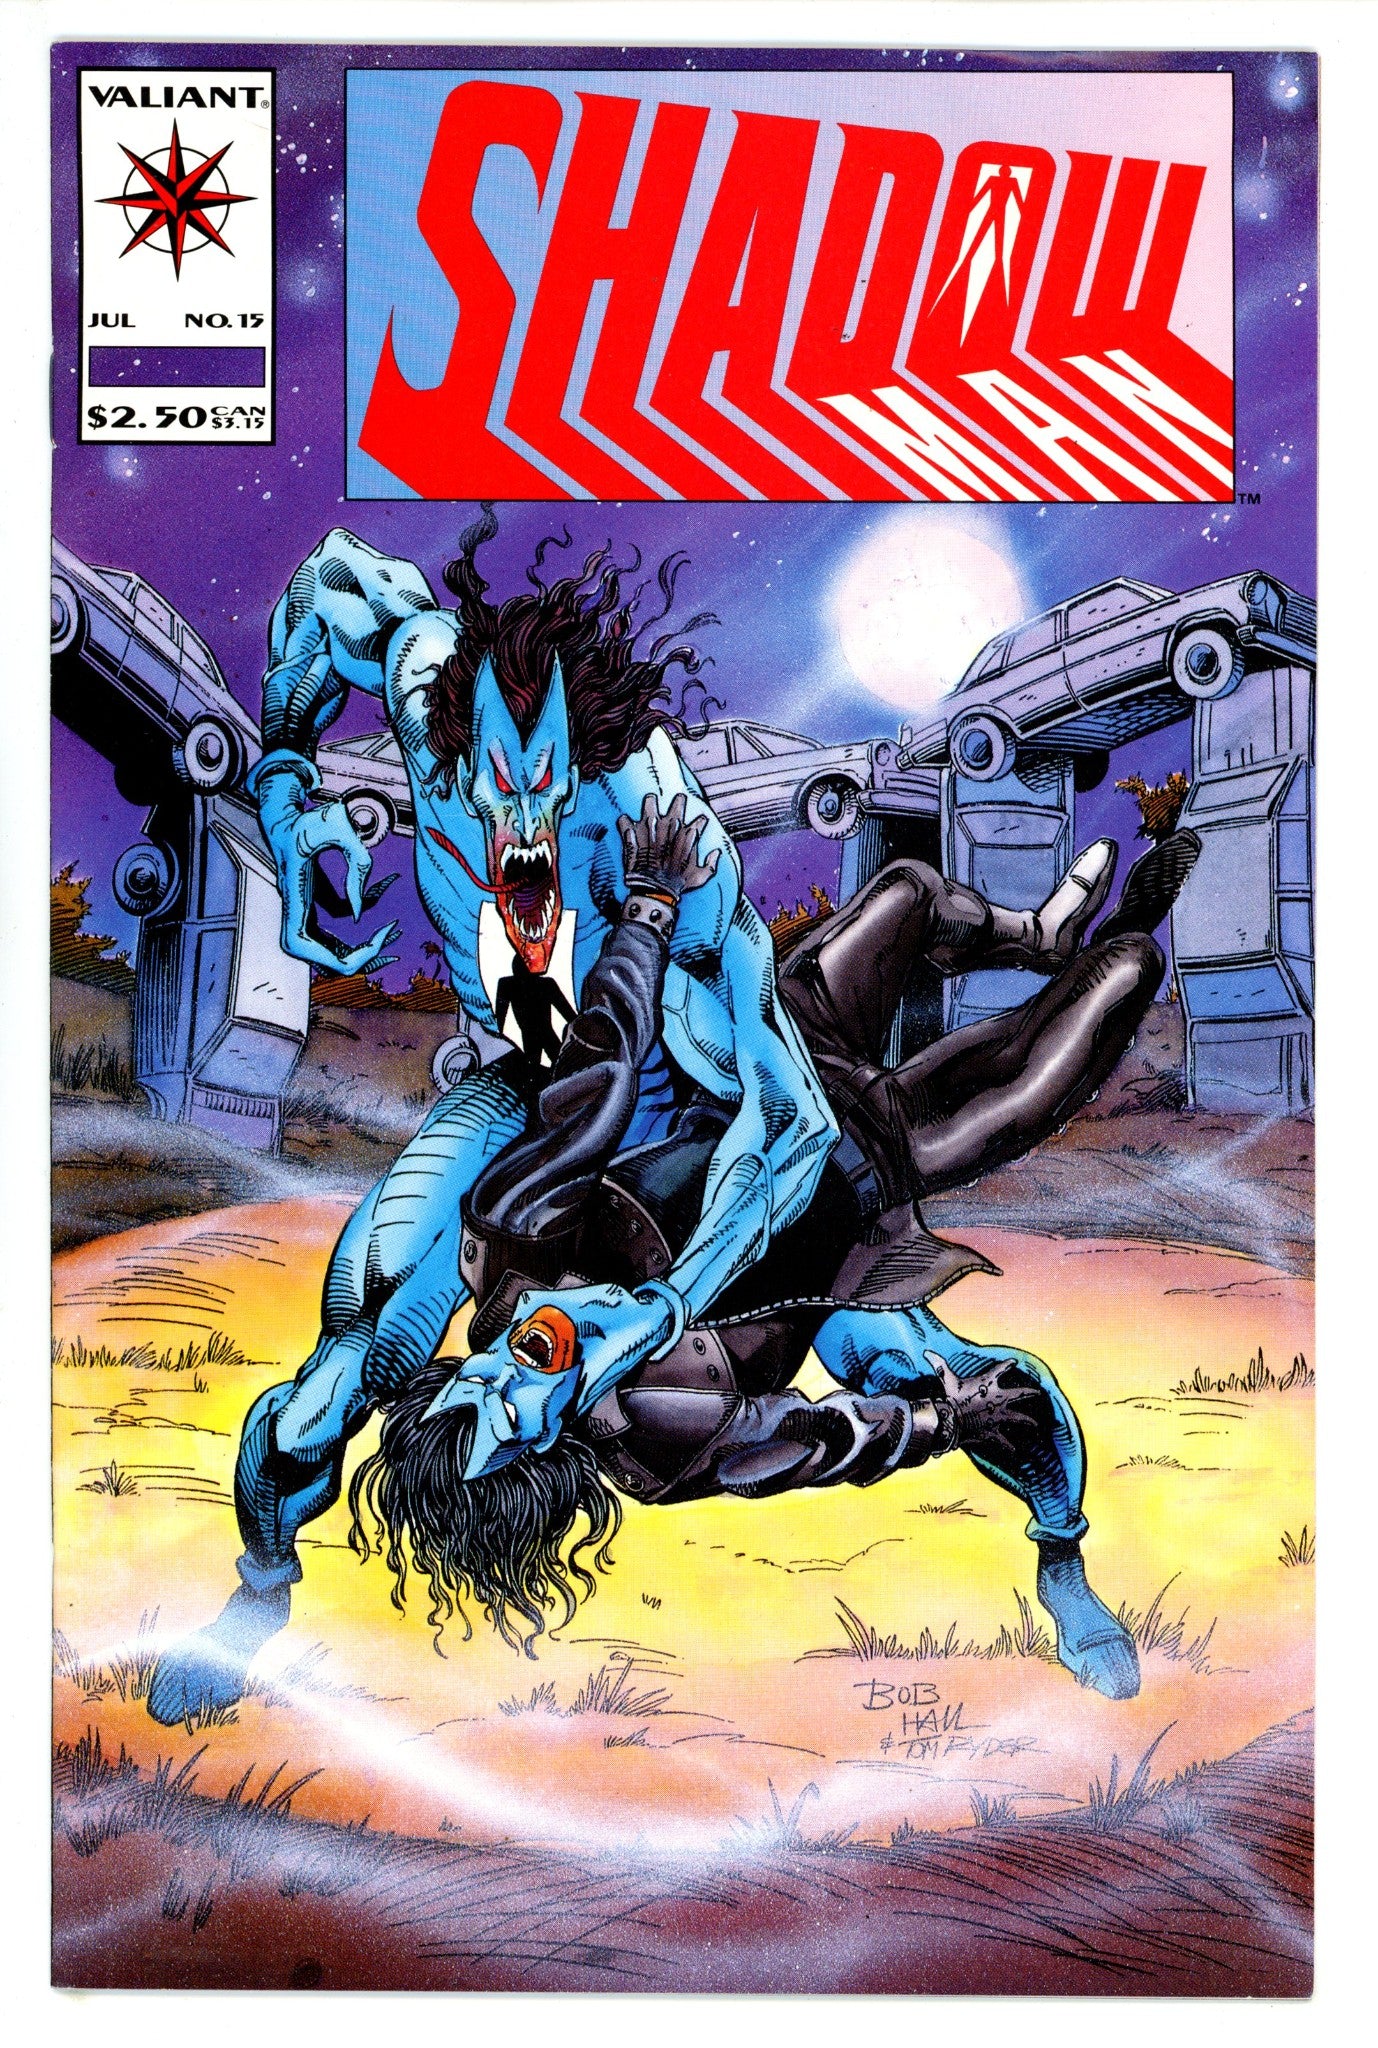 Shadowman Vol 1 15 (1993)